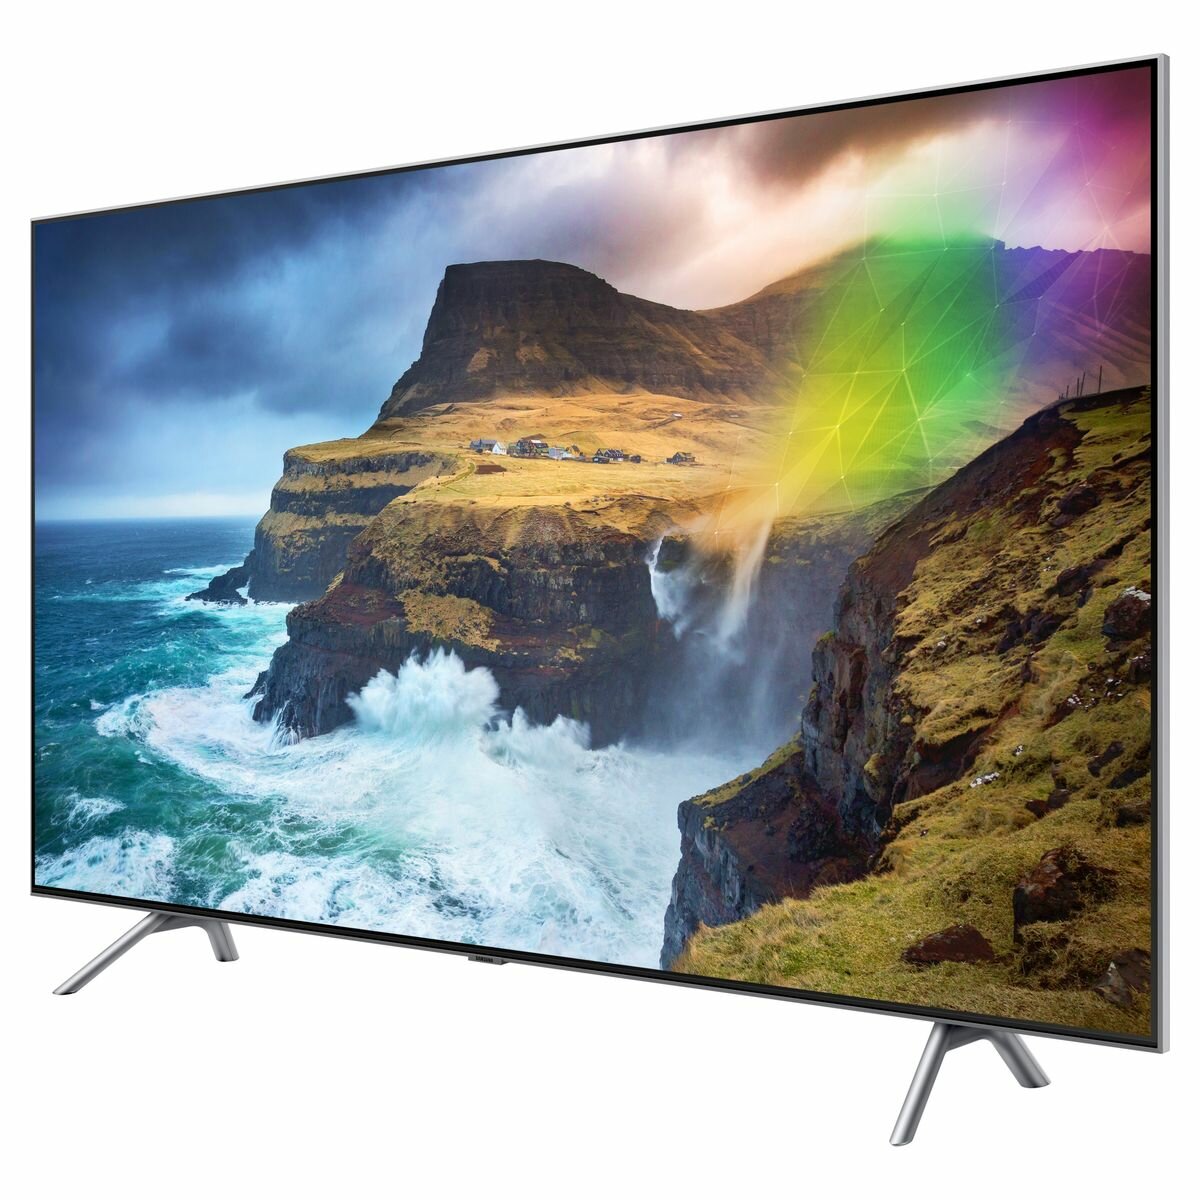 NEW Samsung 82 Inch Series 7 Q75R 4K UHD HDR Smart QLED TV - QA82Q75RAWXXY | eBay